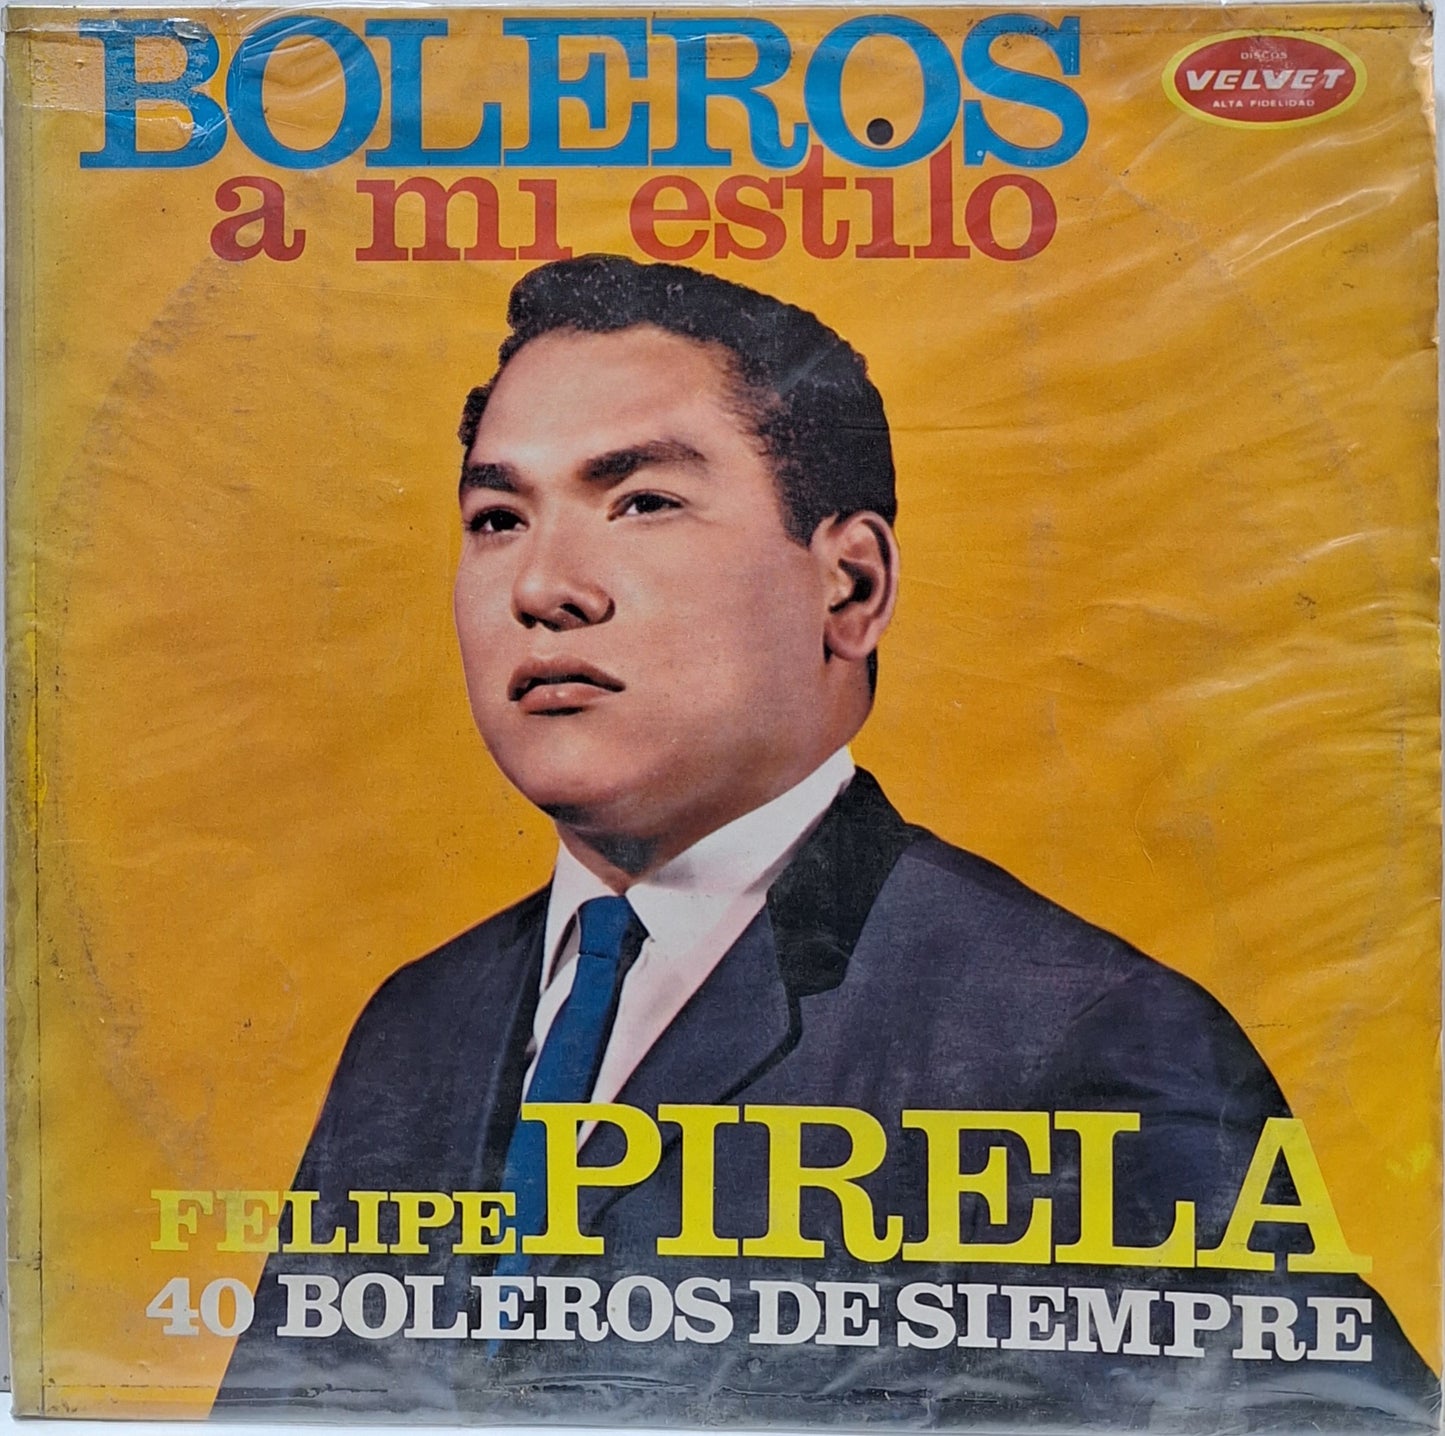 FELIPE PIRELA - 40 BOLEROS DE SIEMPRE  LP